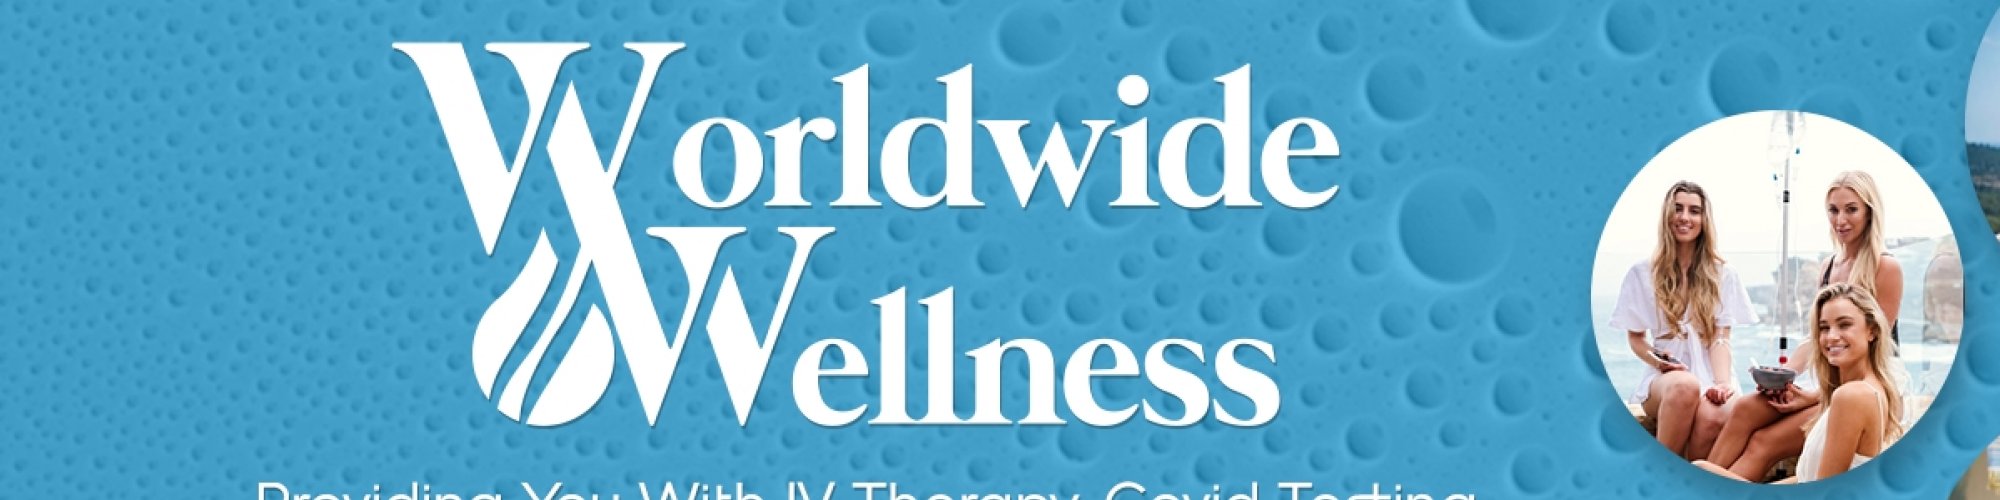 Worldwide Wellness